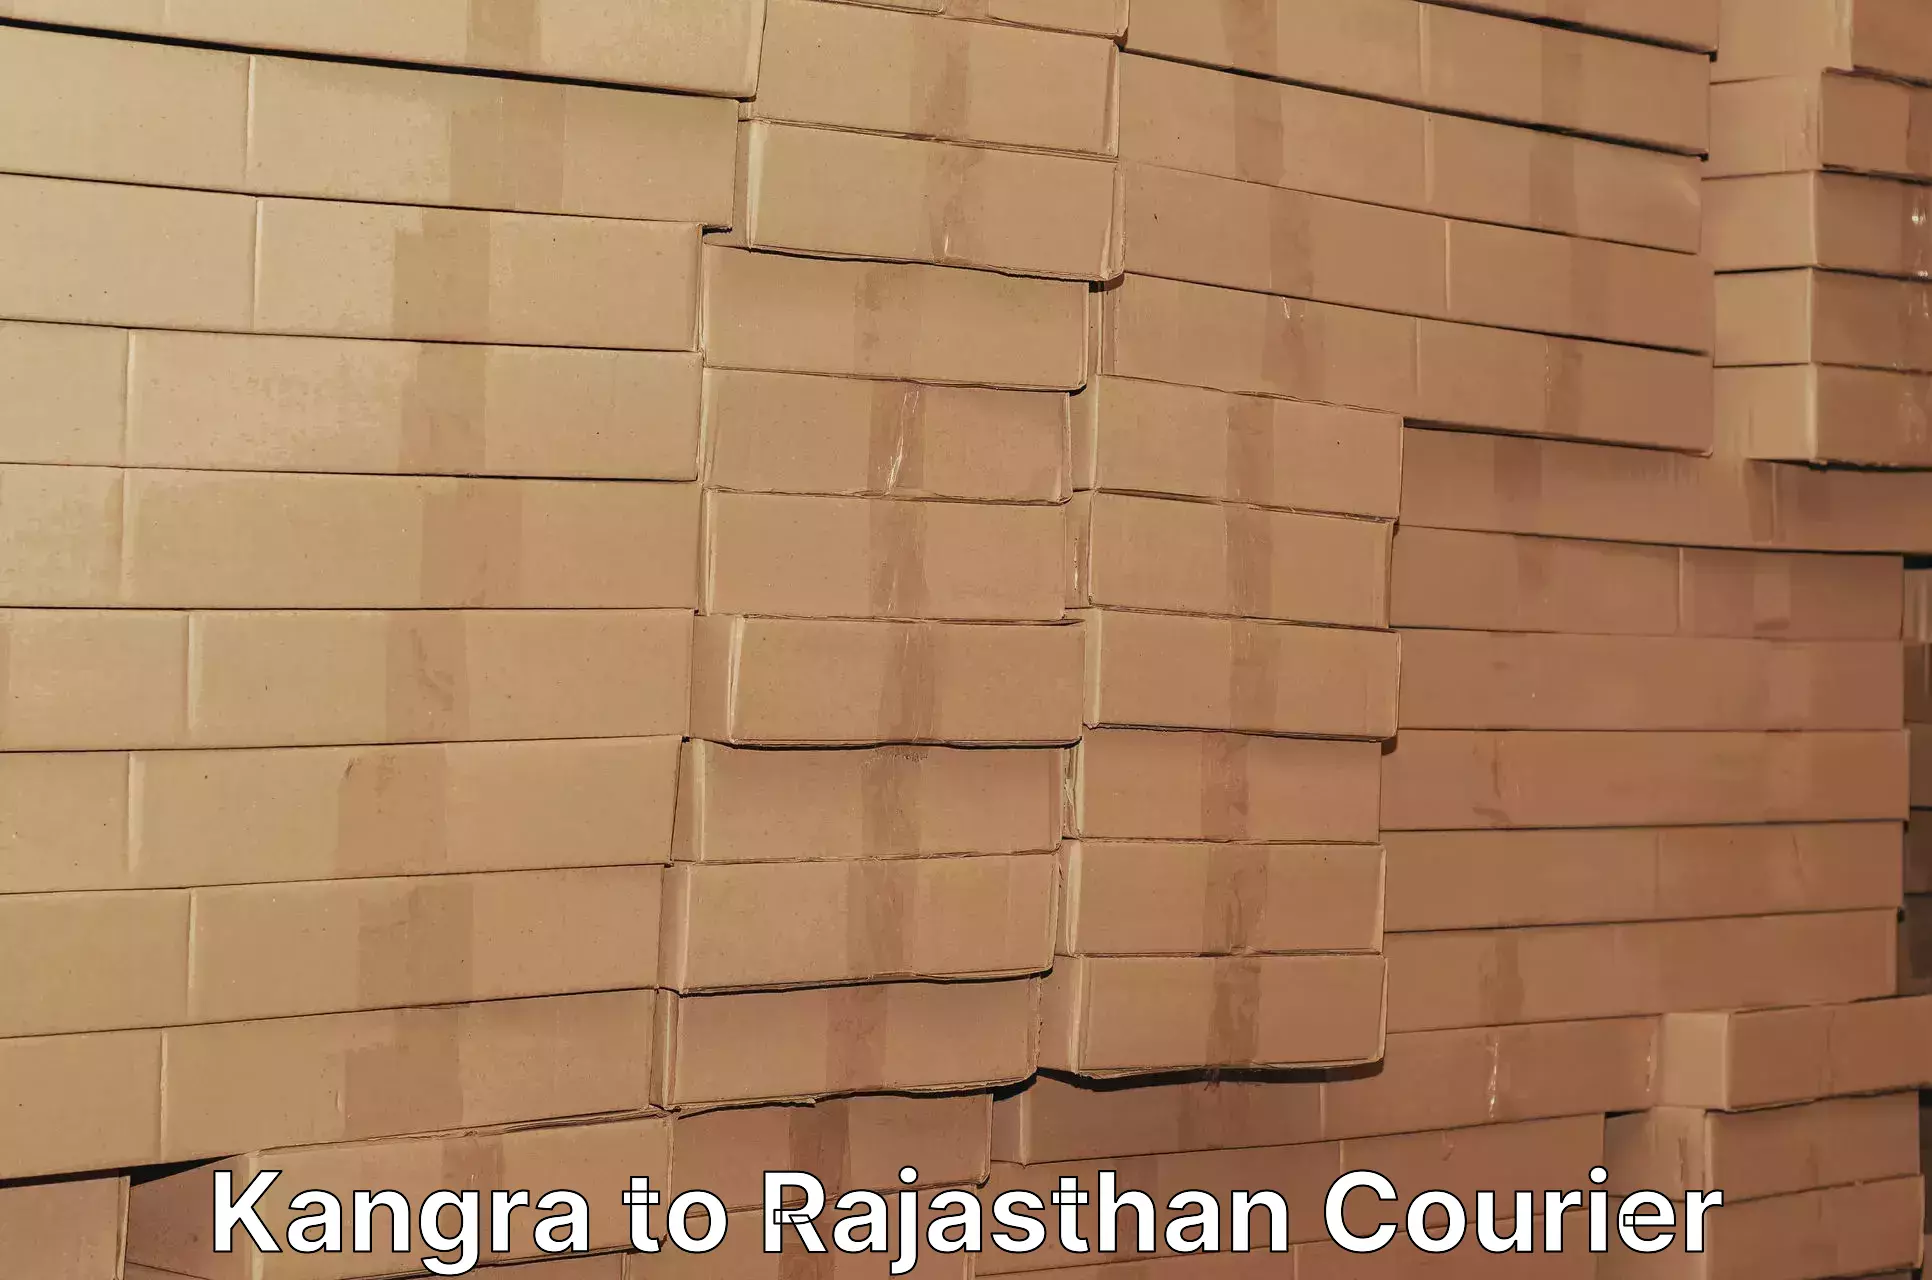 Courier service comparison Kangra to Rawatsar